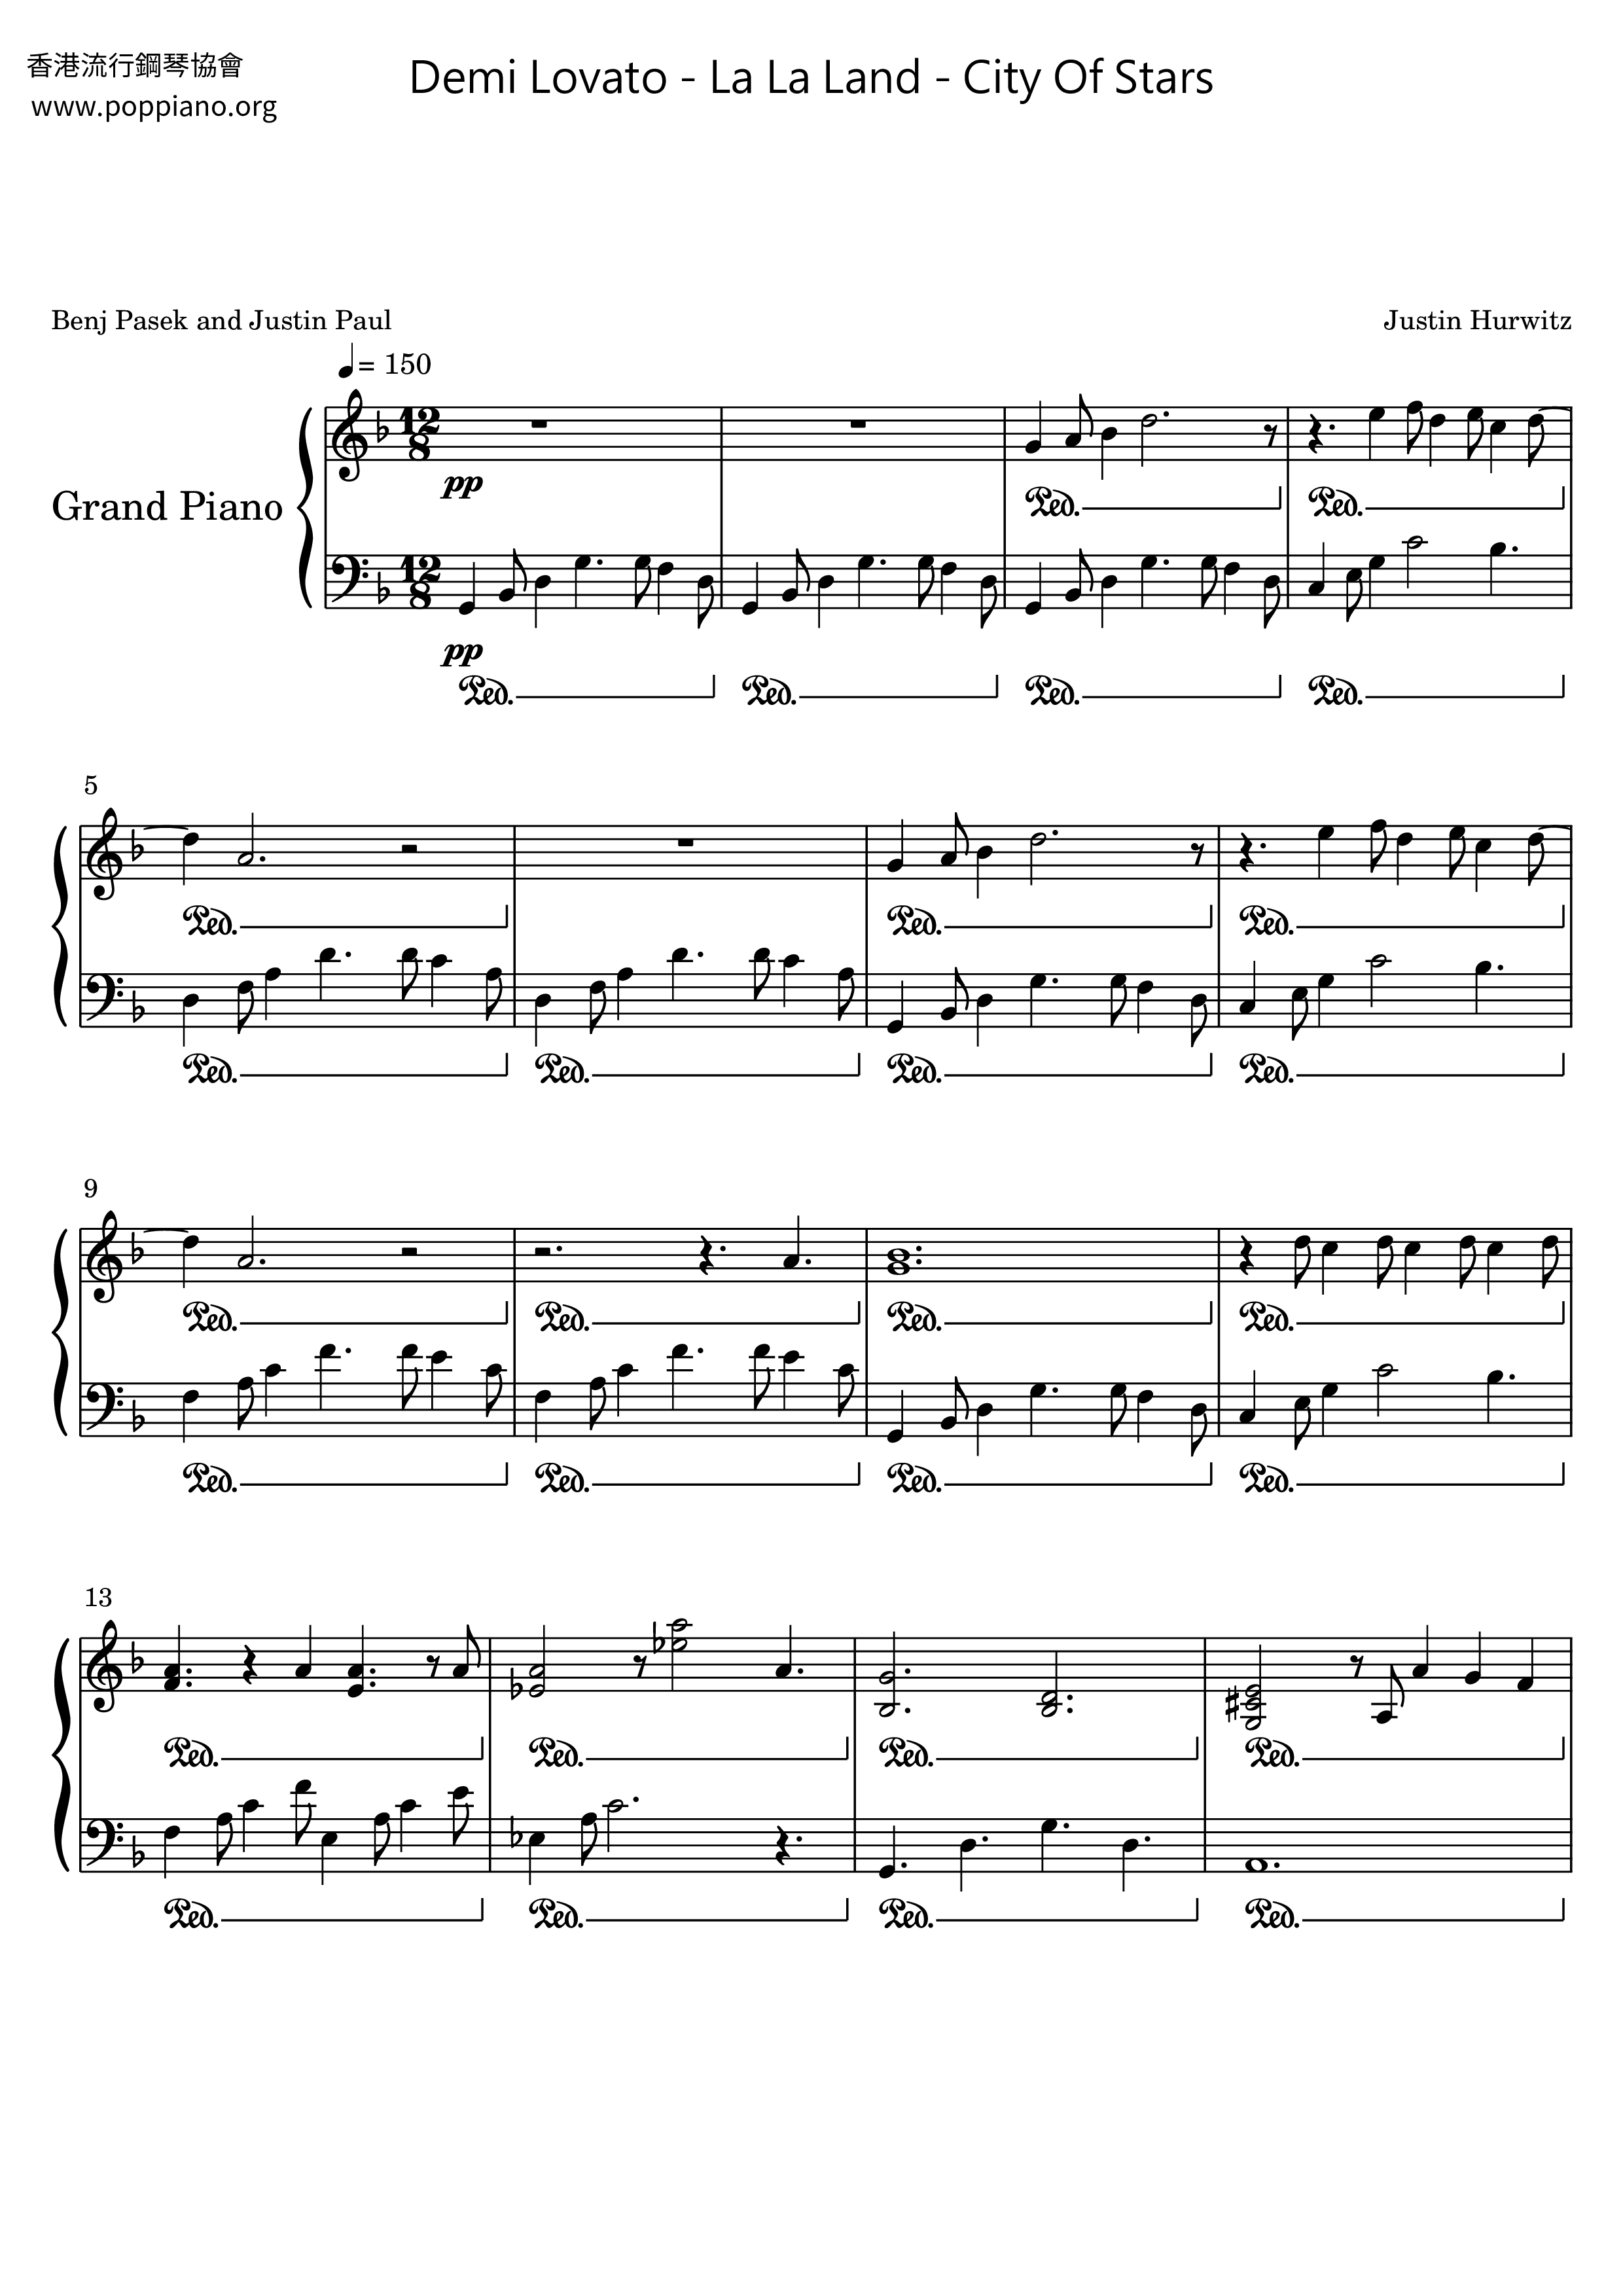 ☆ Demi Lovato-La La Land - City Of Stars Sheet Music pdf, - Free Score  Download ☆